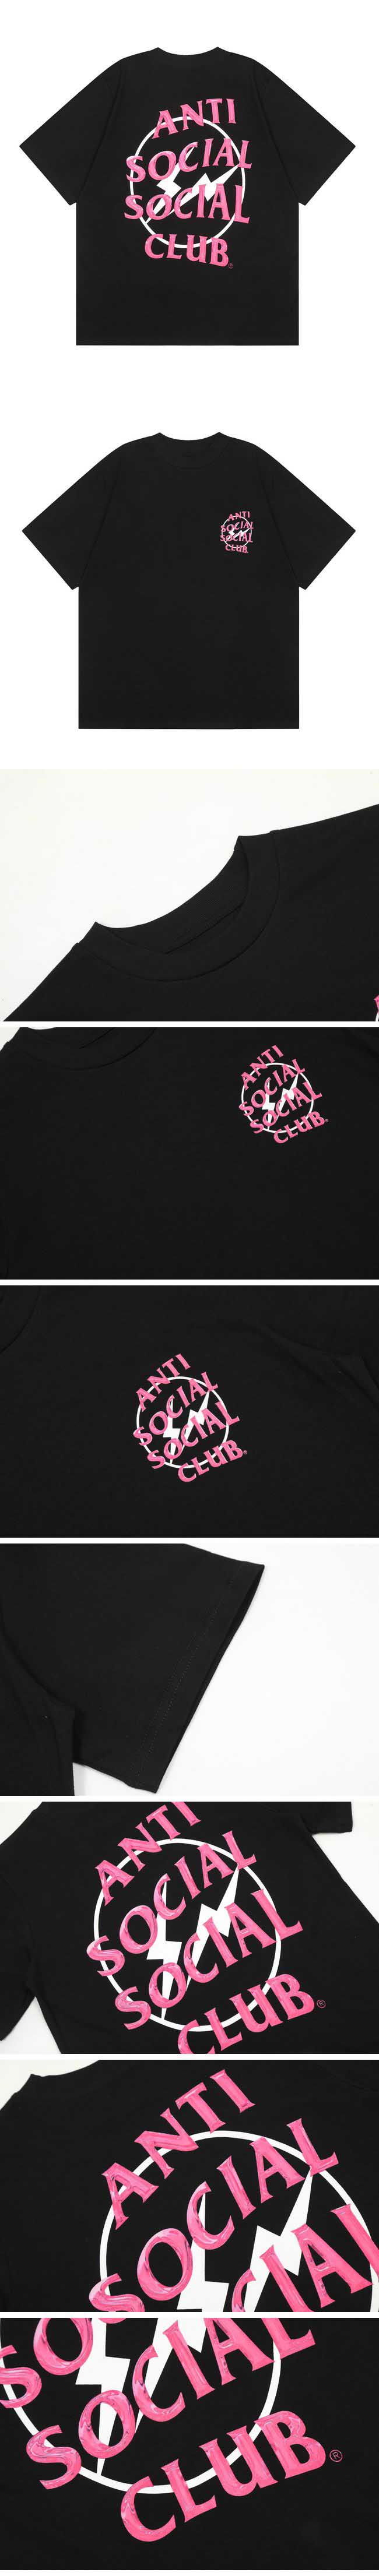 ASSC Anti Social Social Clubx Fragmeent Design Tee アンチソーシャルソーシャルクラブ x フラグメント デザイン Tシャツ ピンク